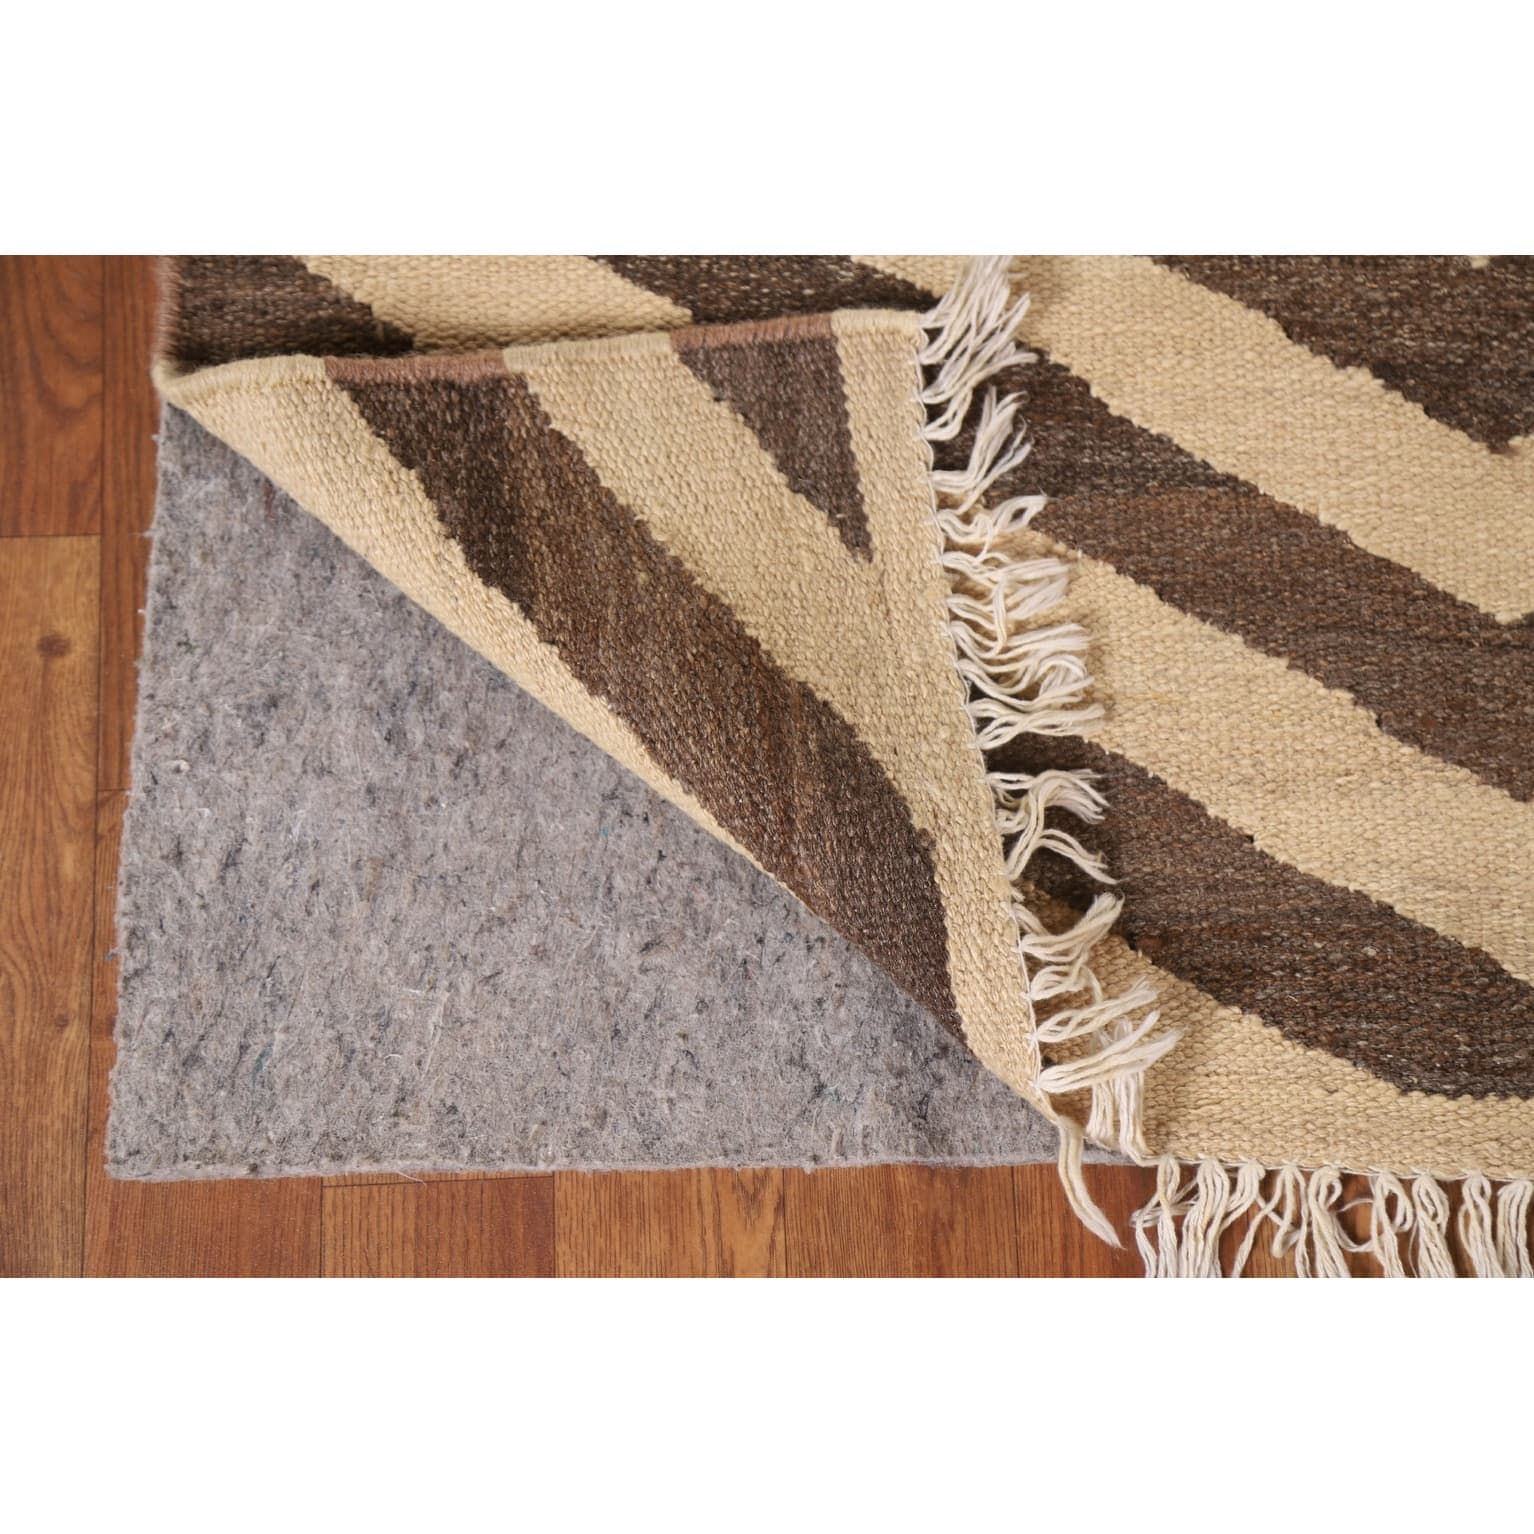 Chevron Style Kilim Runner Rug Flat-weave Wool Carpet - 2'7